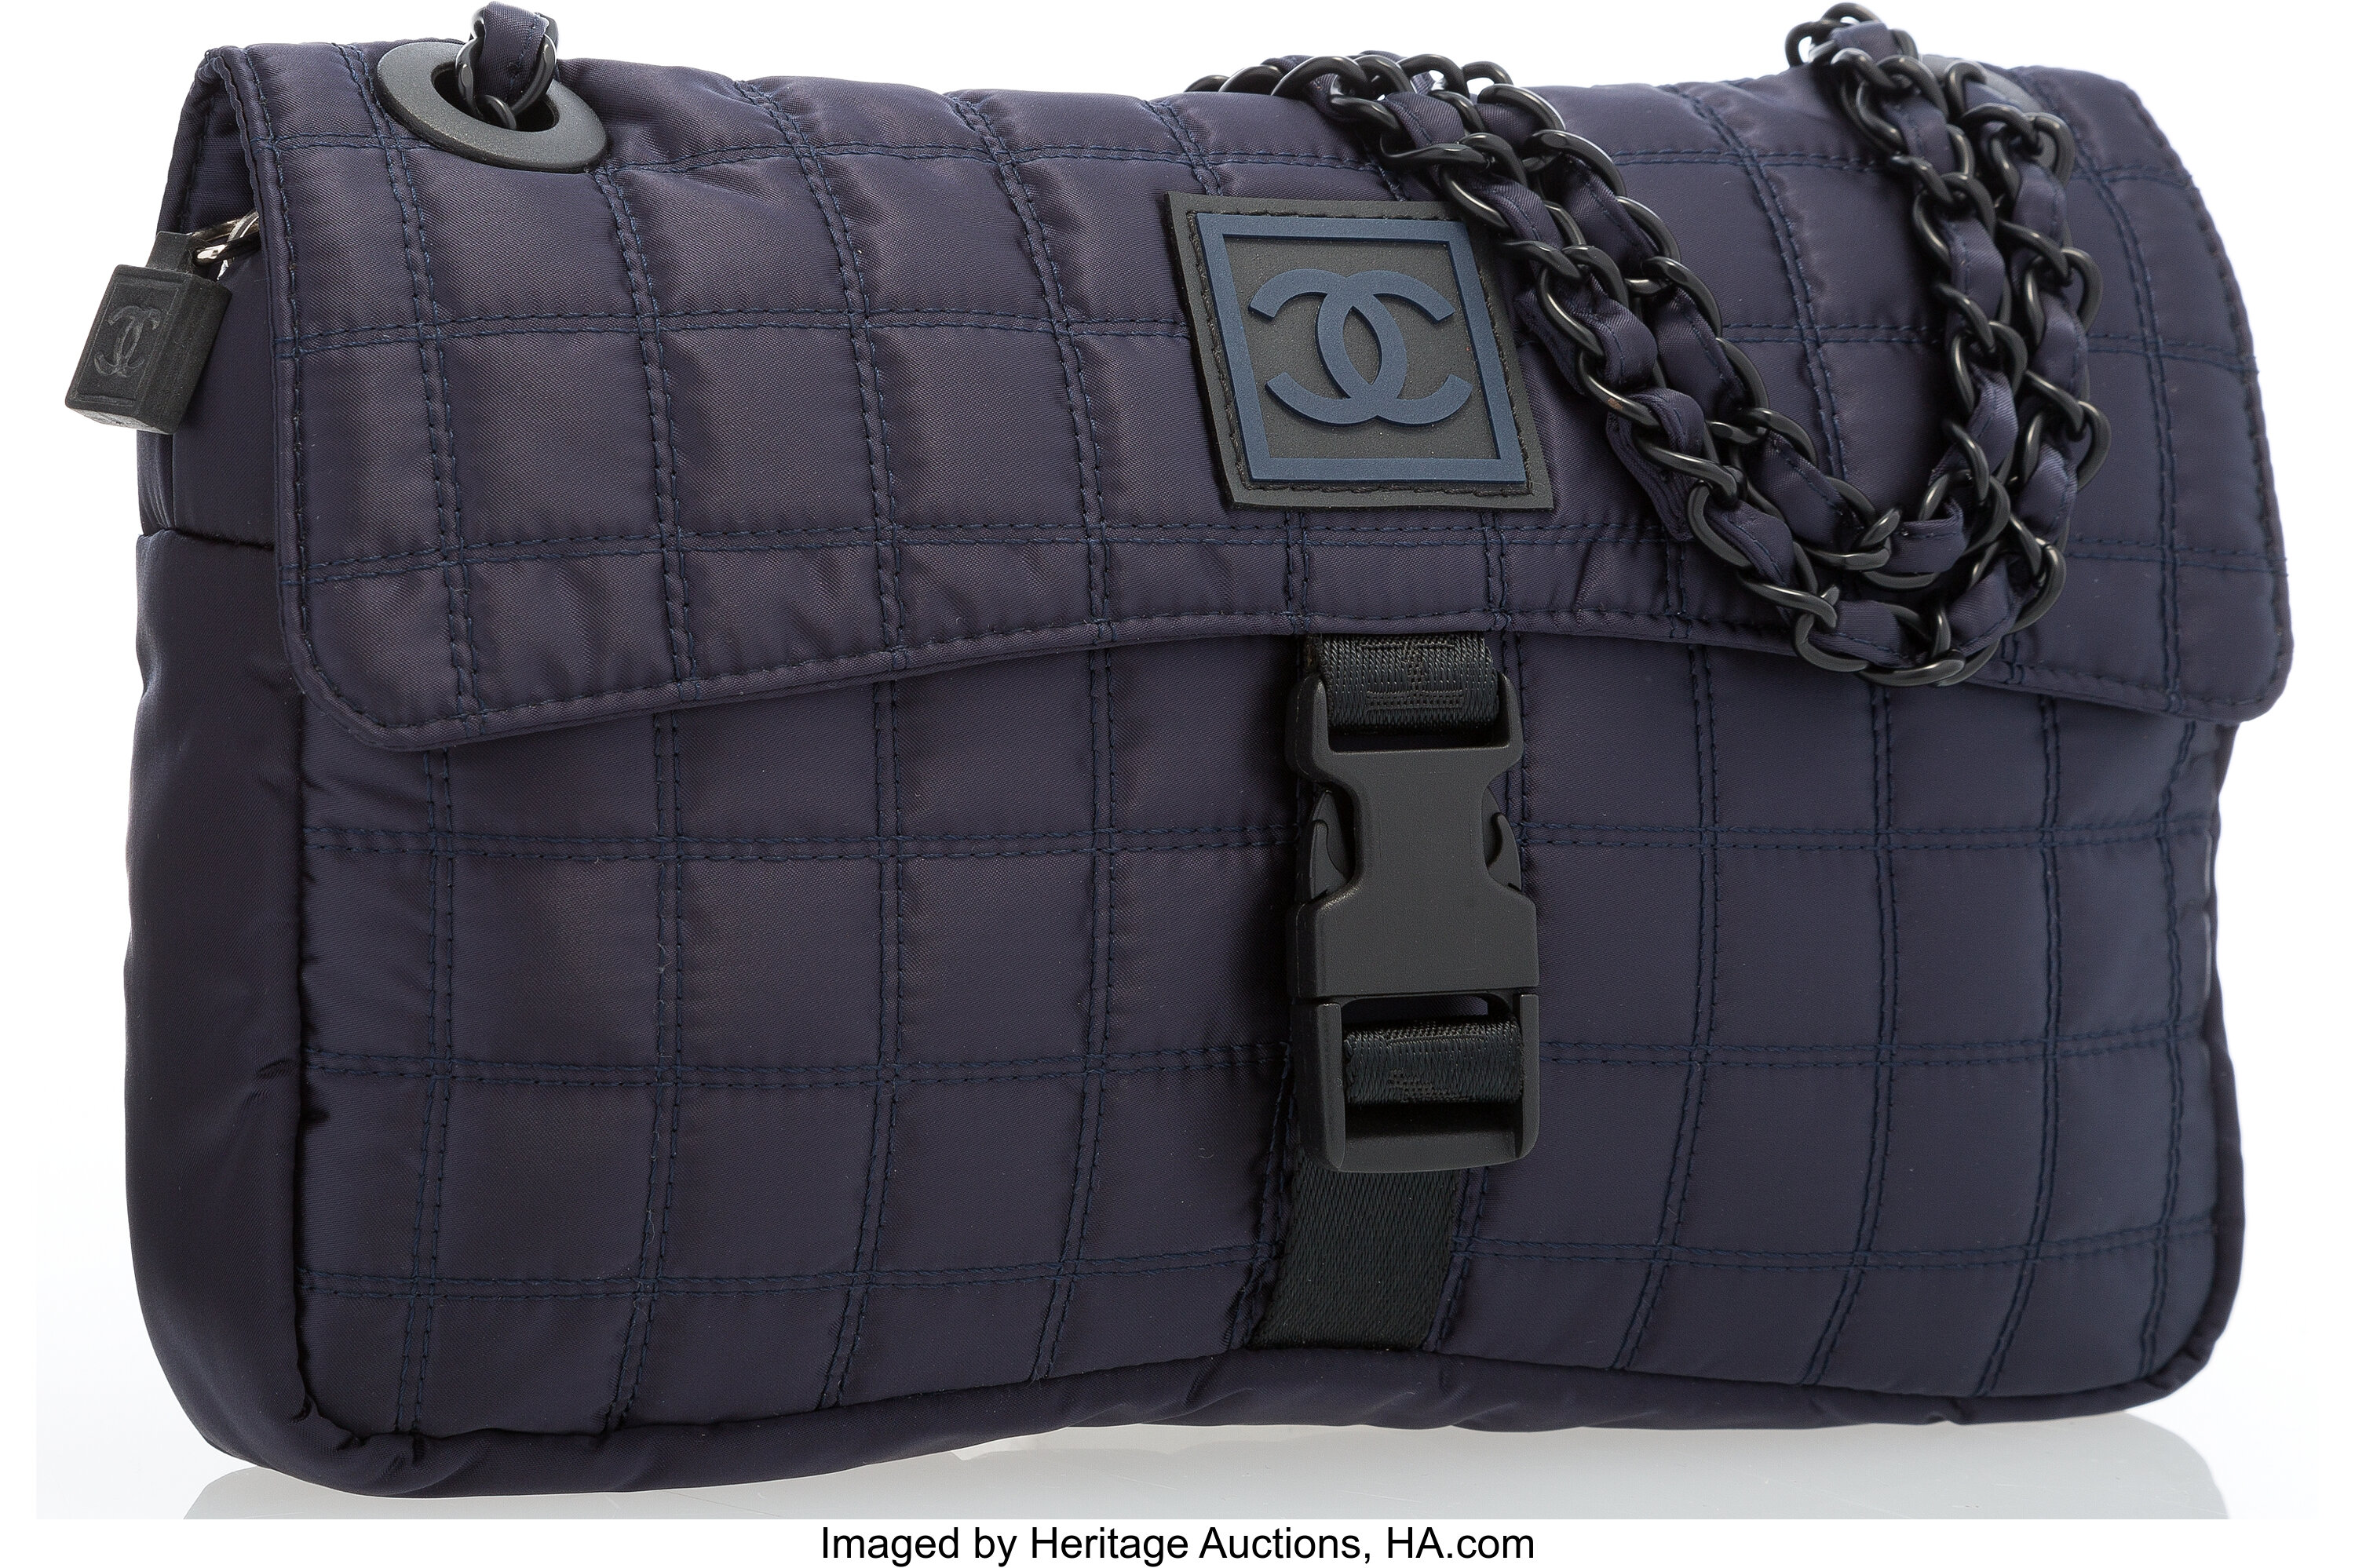 Chanel Navy Quilted Nylon Sport Ligne Flap Bag. Excellent